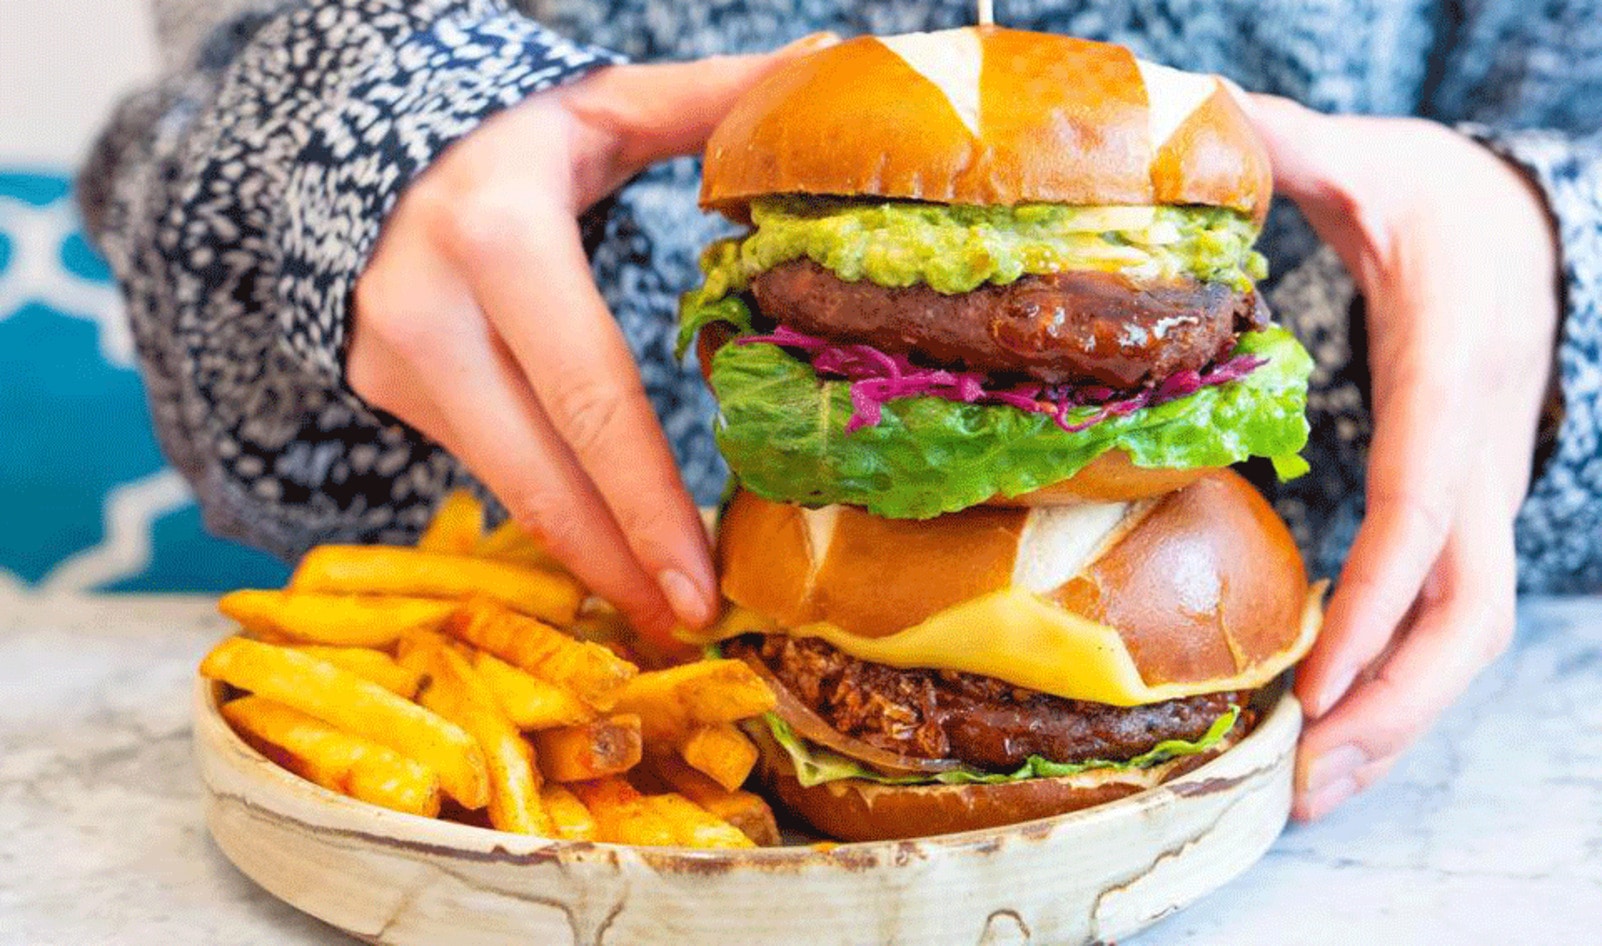 EU Wants to Call Plant-Based Burgers “Veggie Discs”